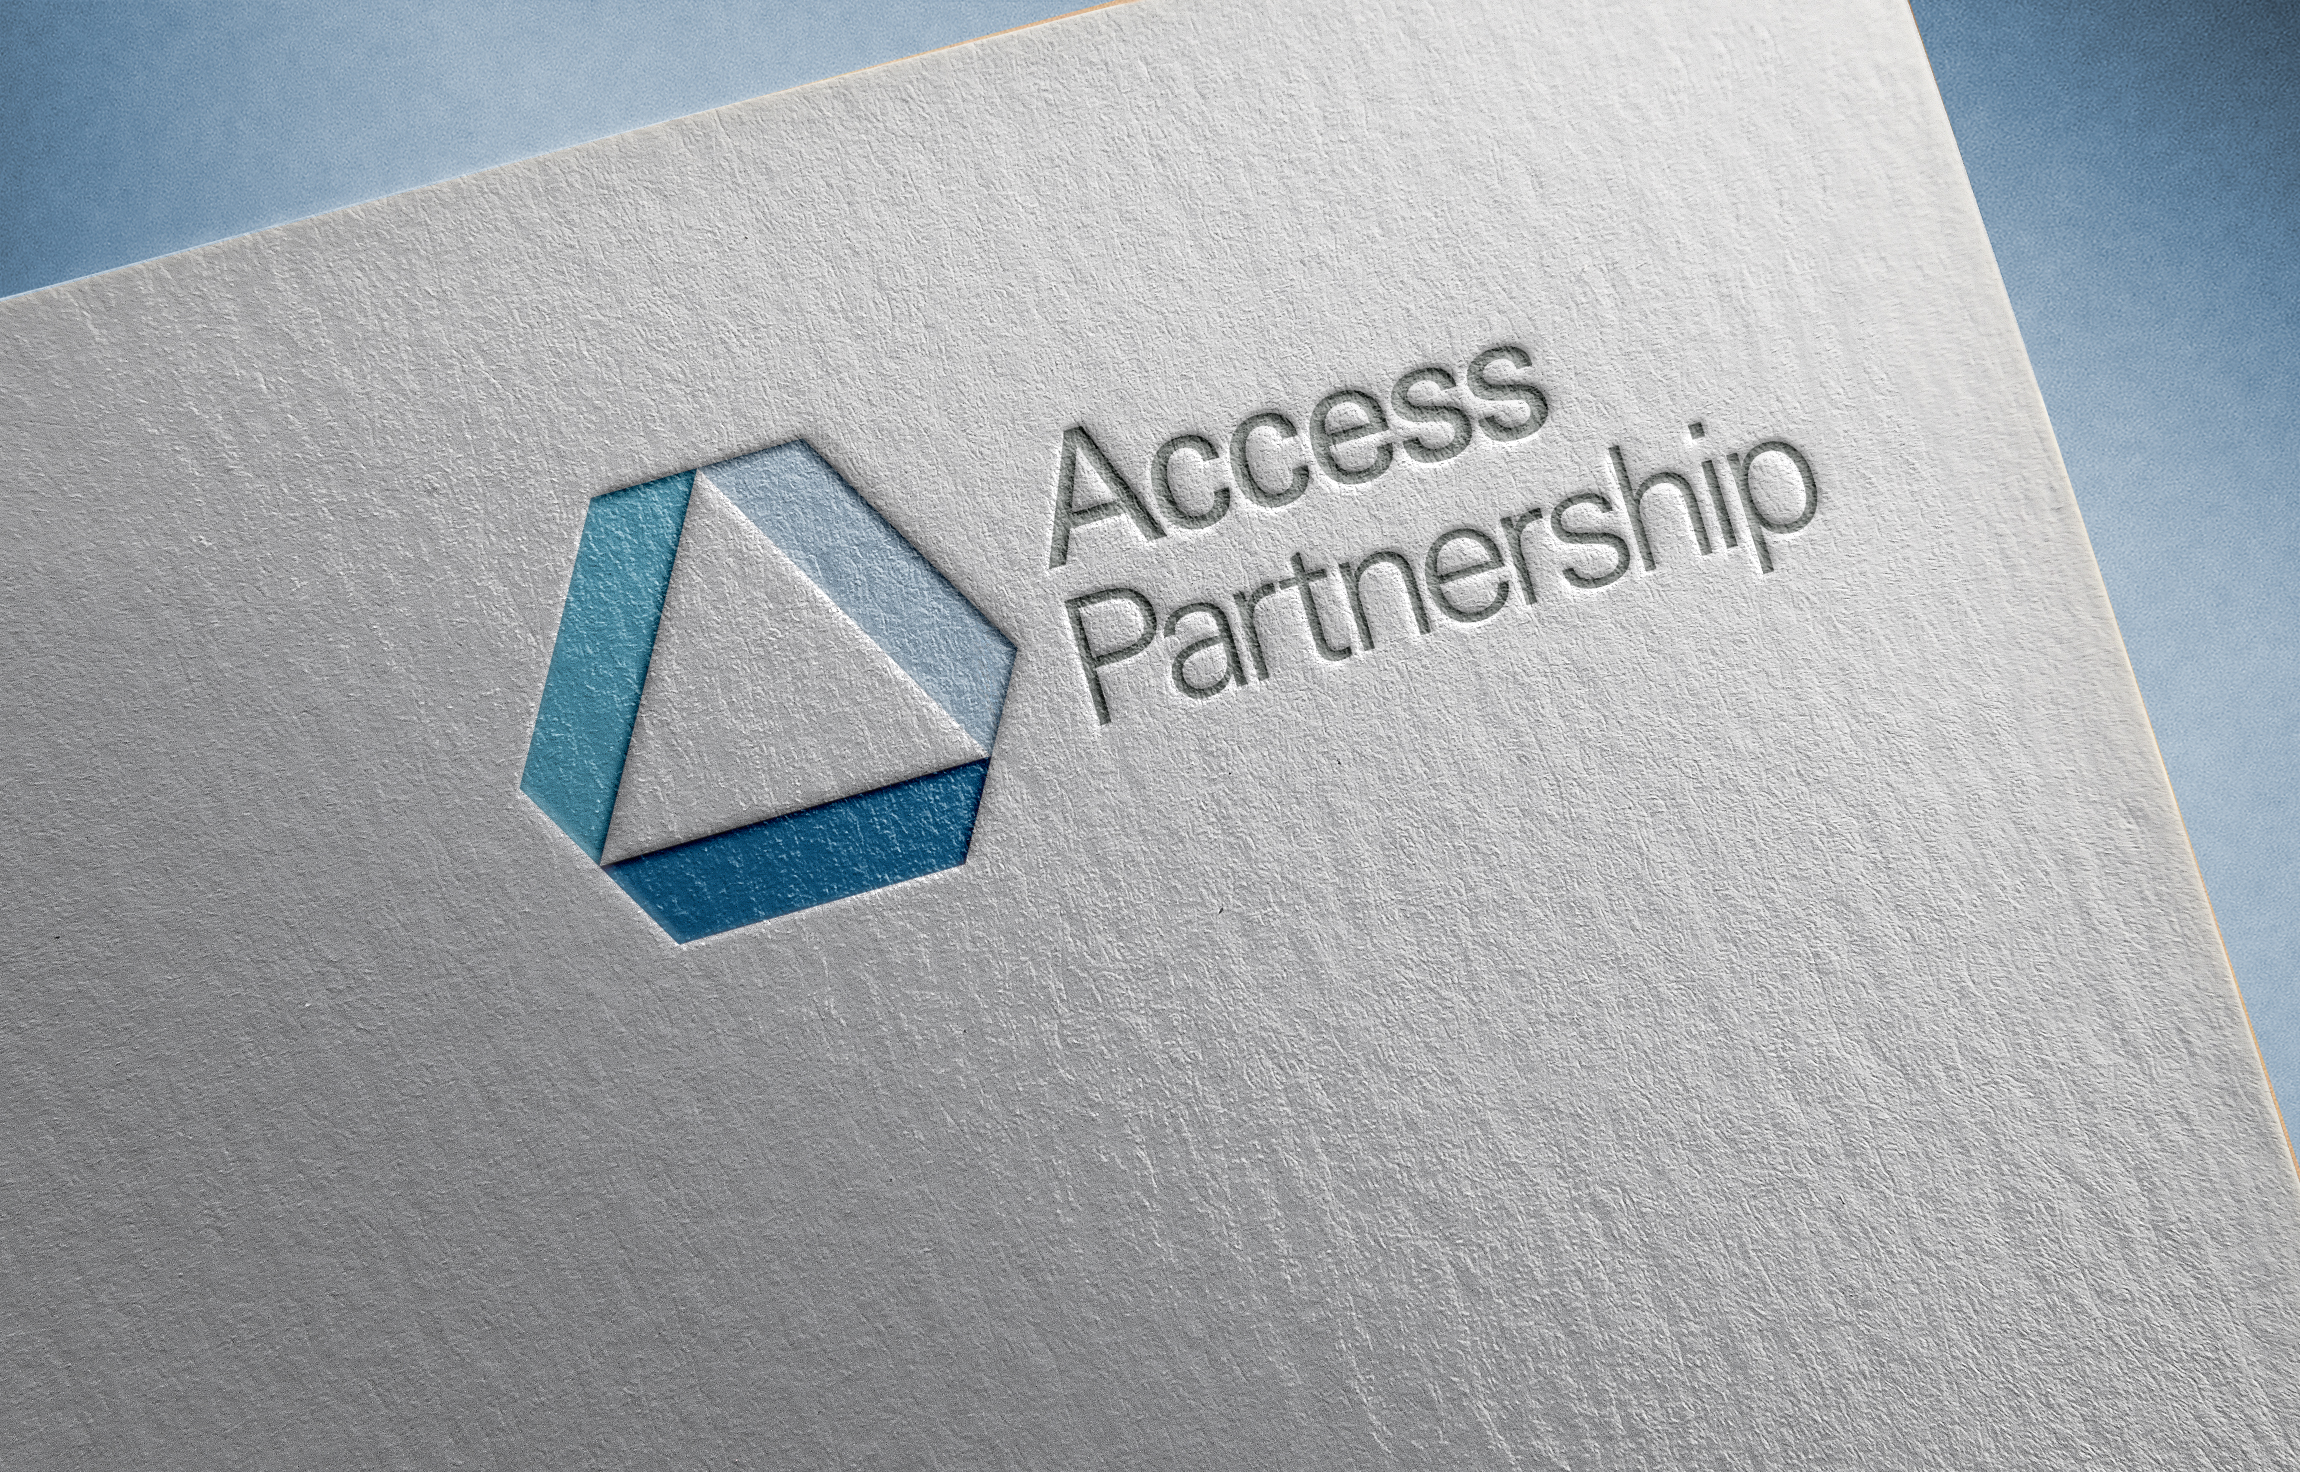 Access Partnership Wins AmCham Represent 2021 Award for Best Business Transformation